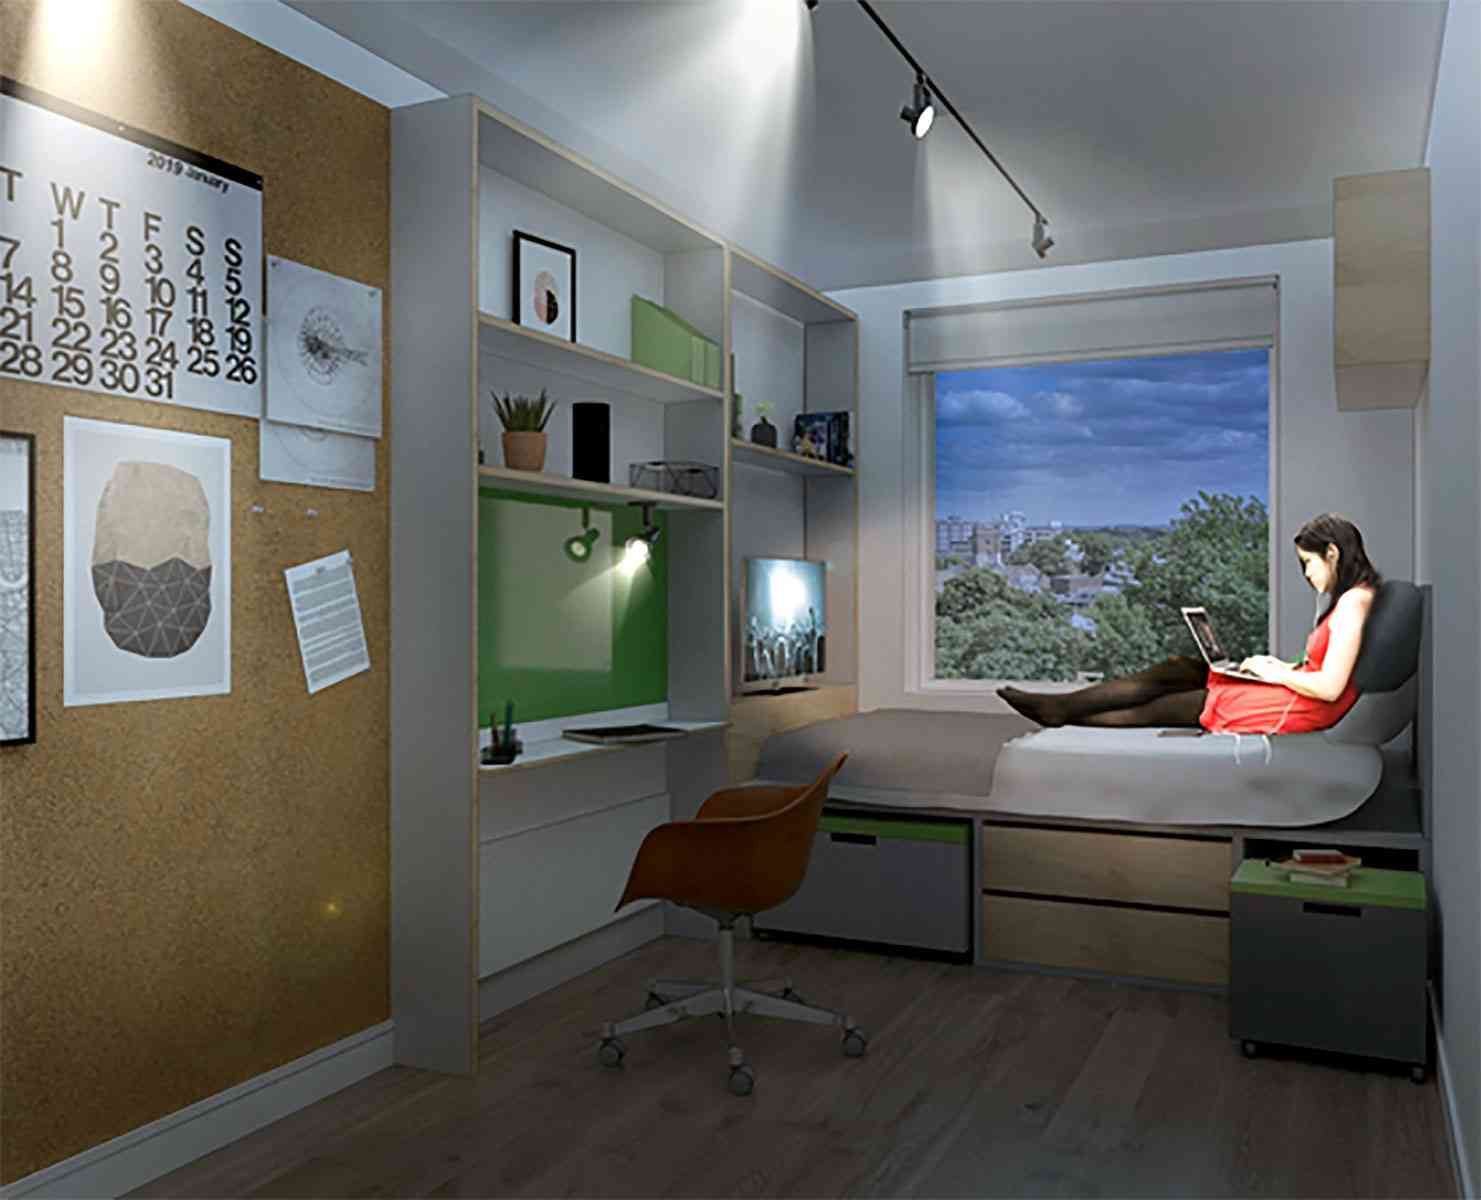 Proposed bedroom: Walkden